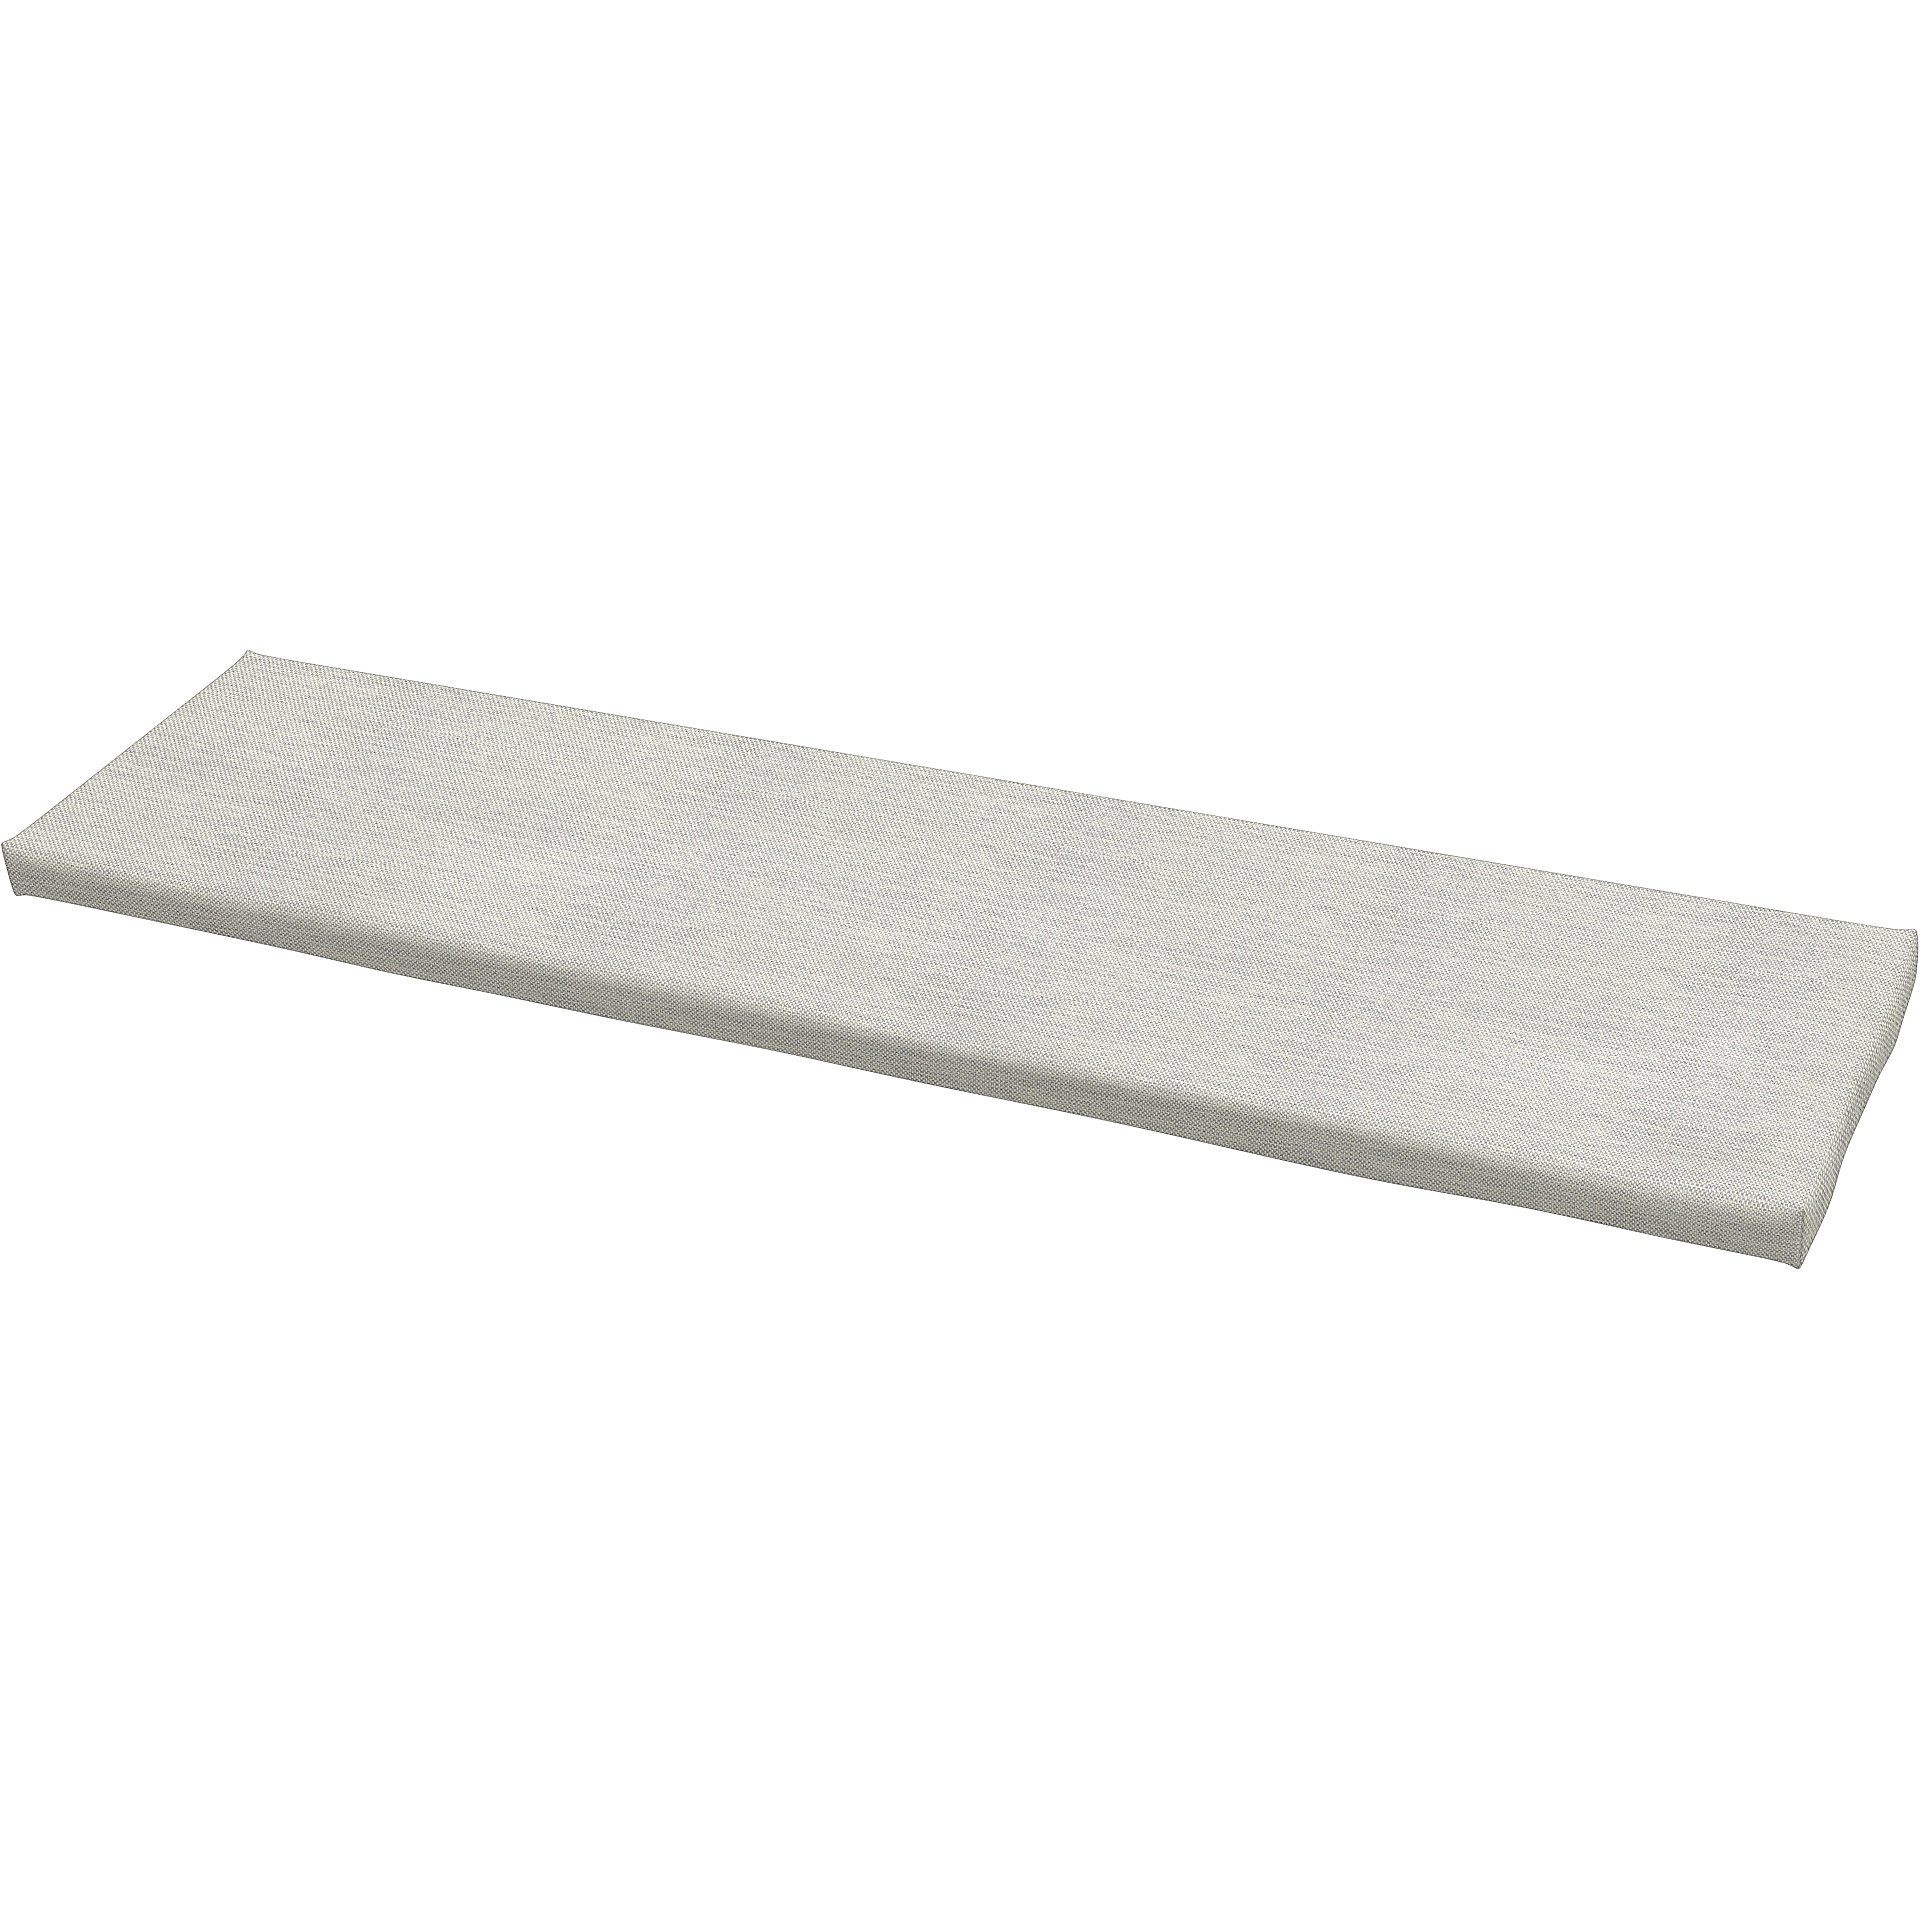 IKEA - Universal bench cushion cover 140x35x3,5 cm, Silver Grey, Cotton - Bemz